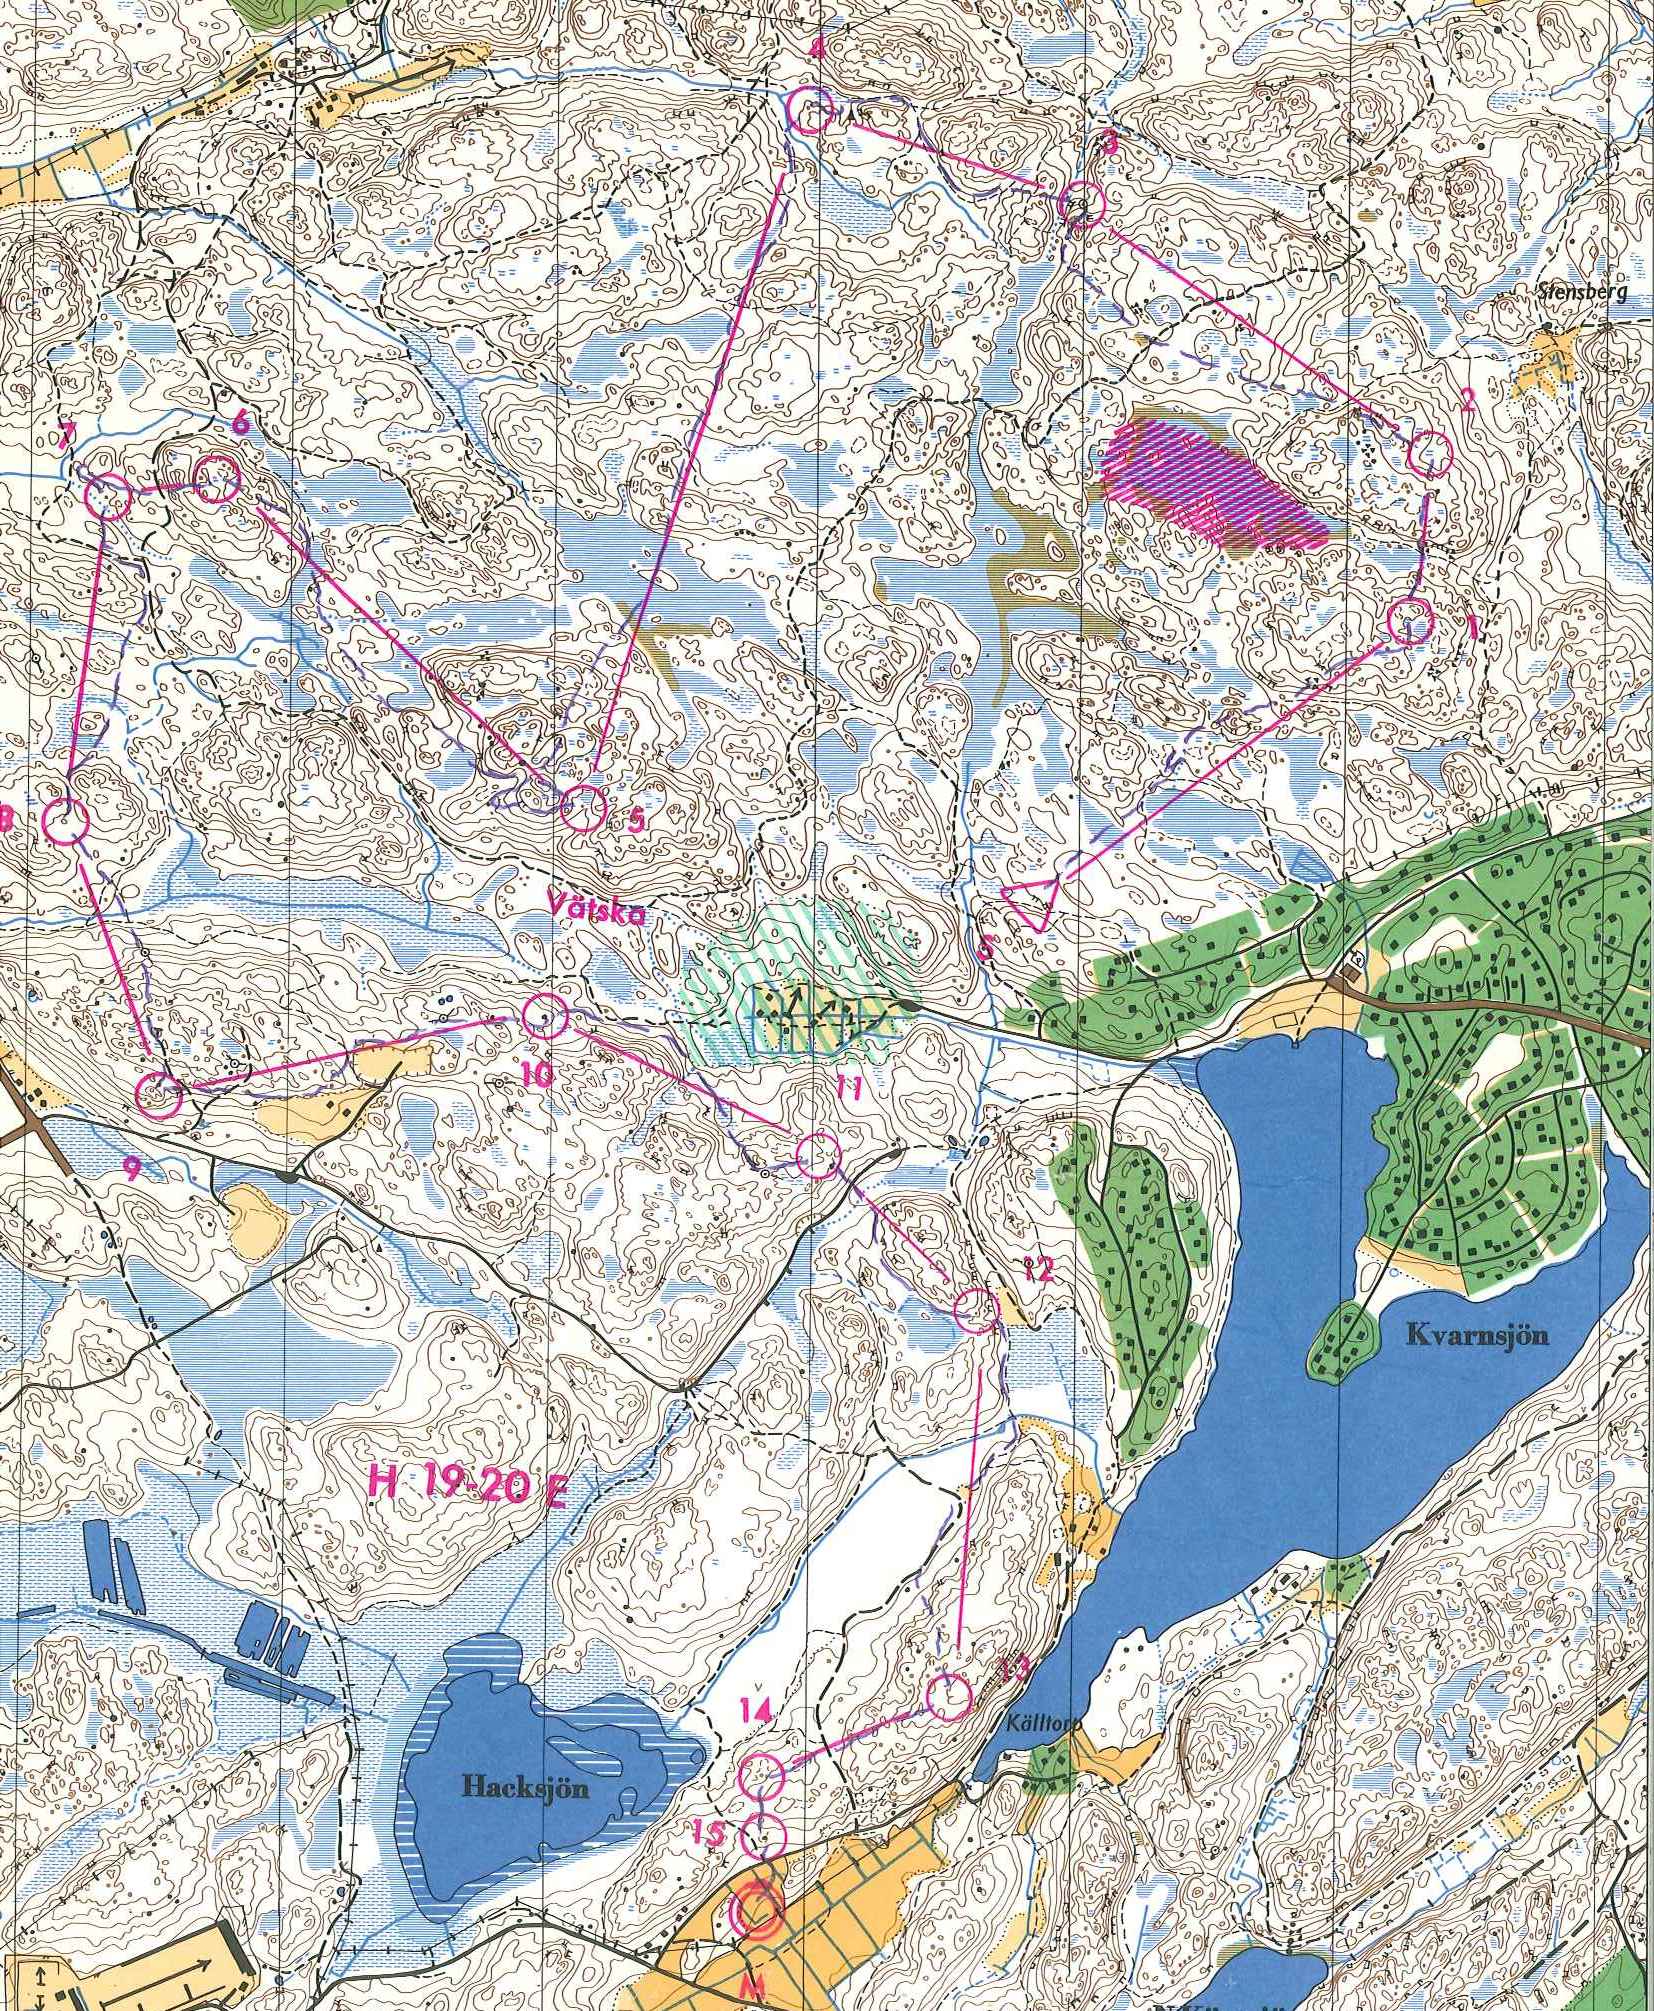 Snättringe (1978-09-24)